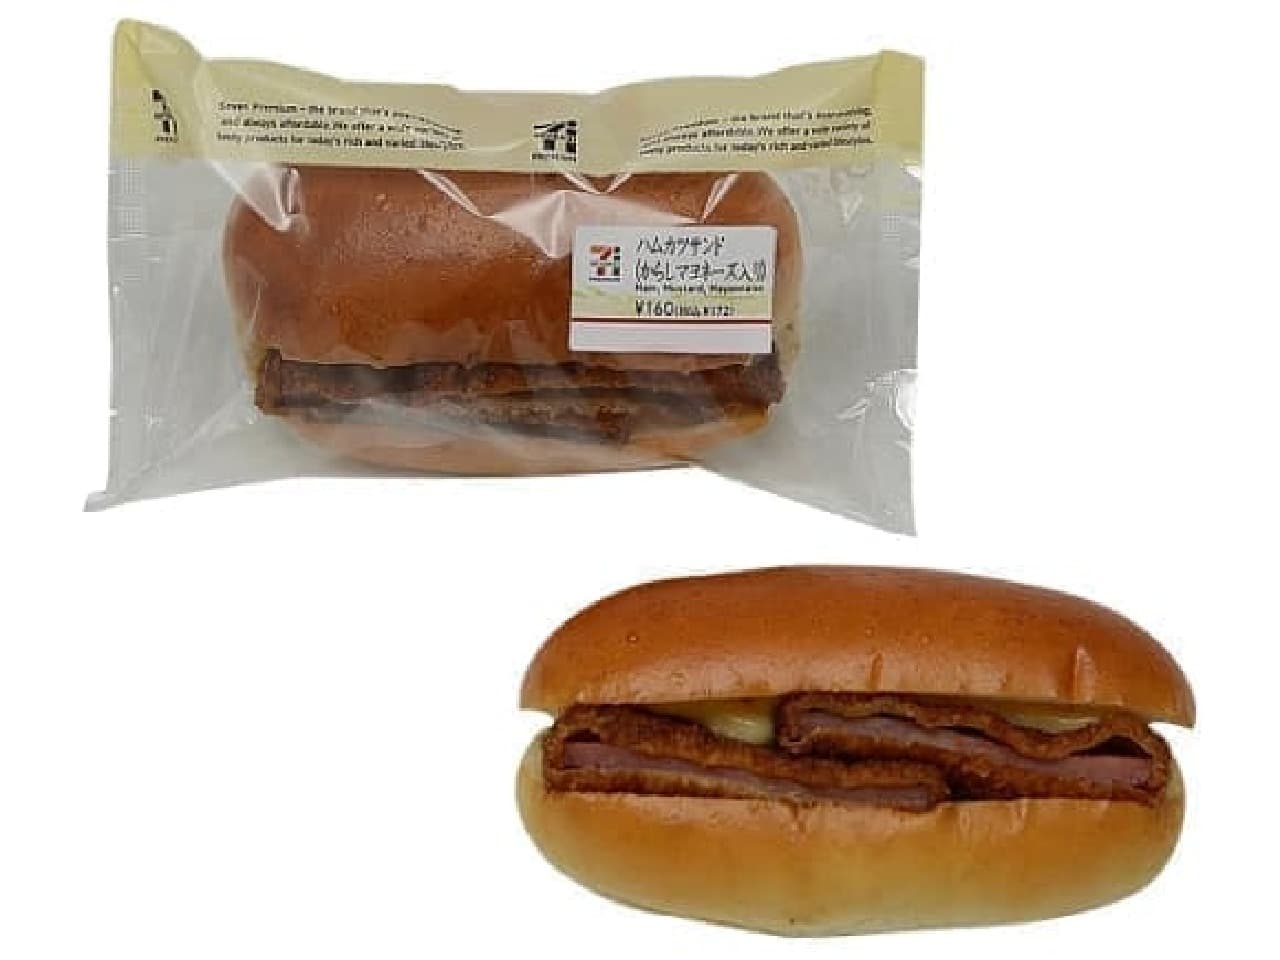 7-ELEVEN "Ham cutlet sandwich (with mustard mayonnaise)"